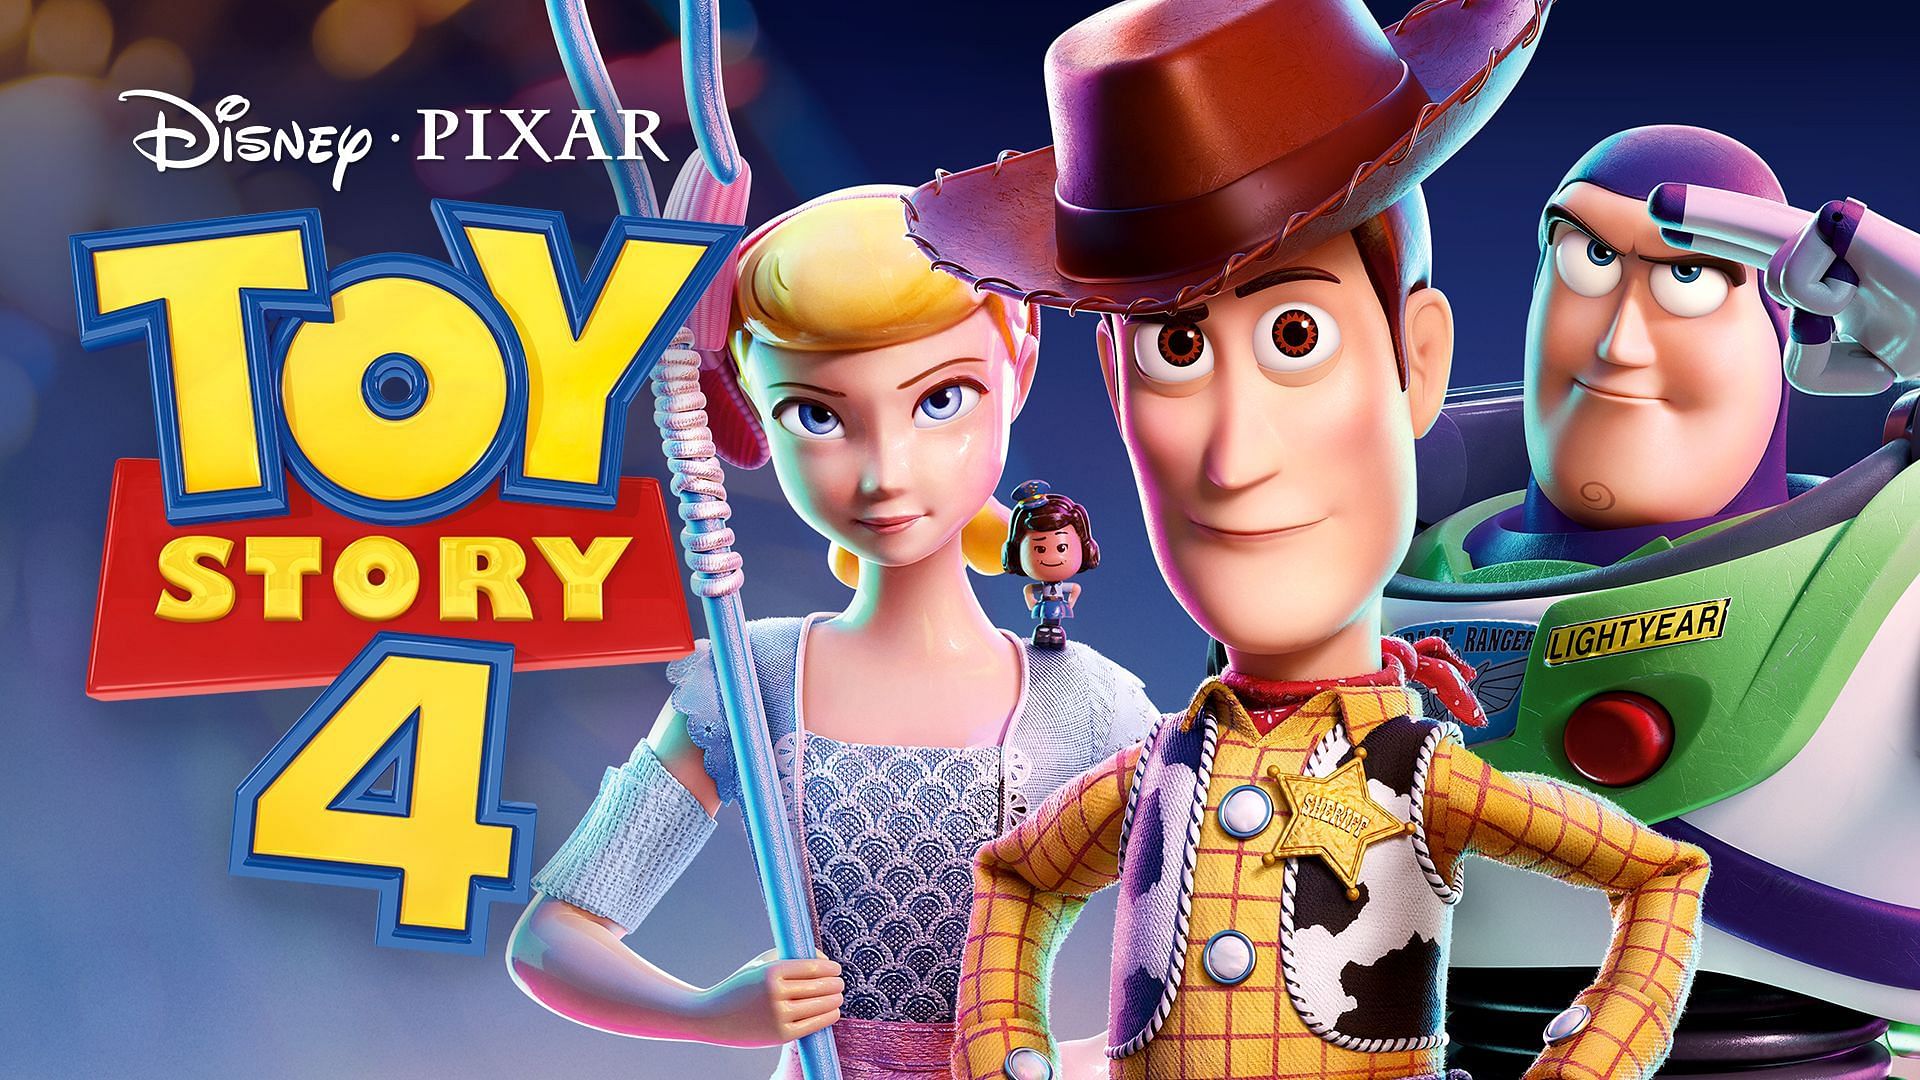 Toy Story 4 (Image via Disney)